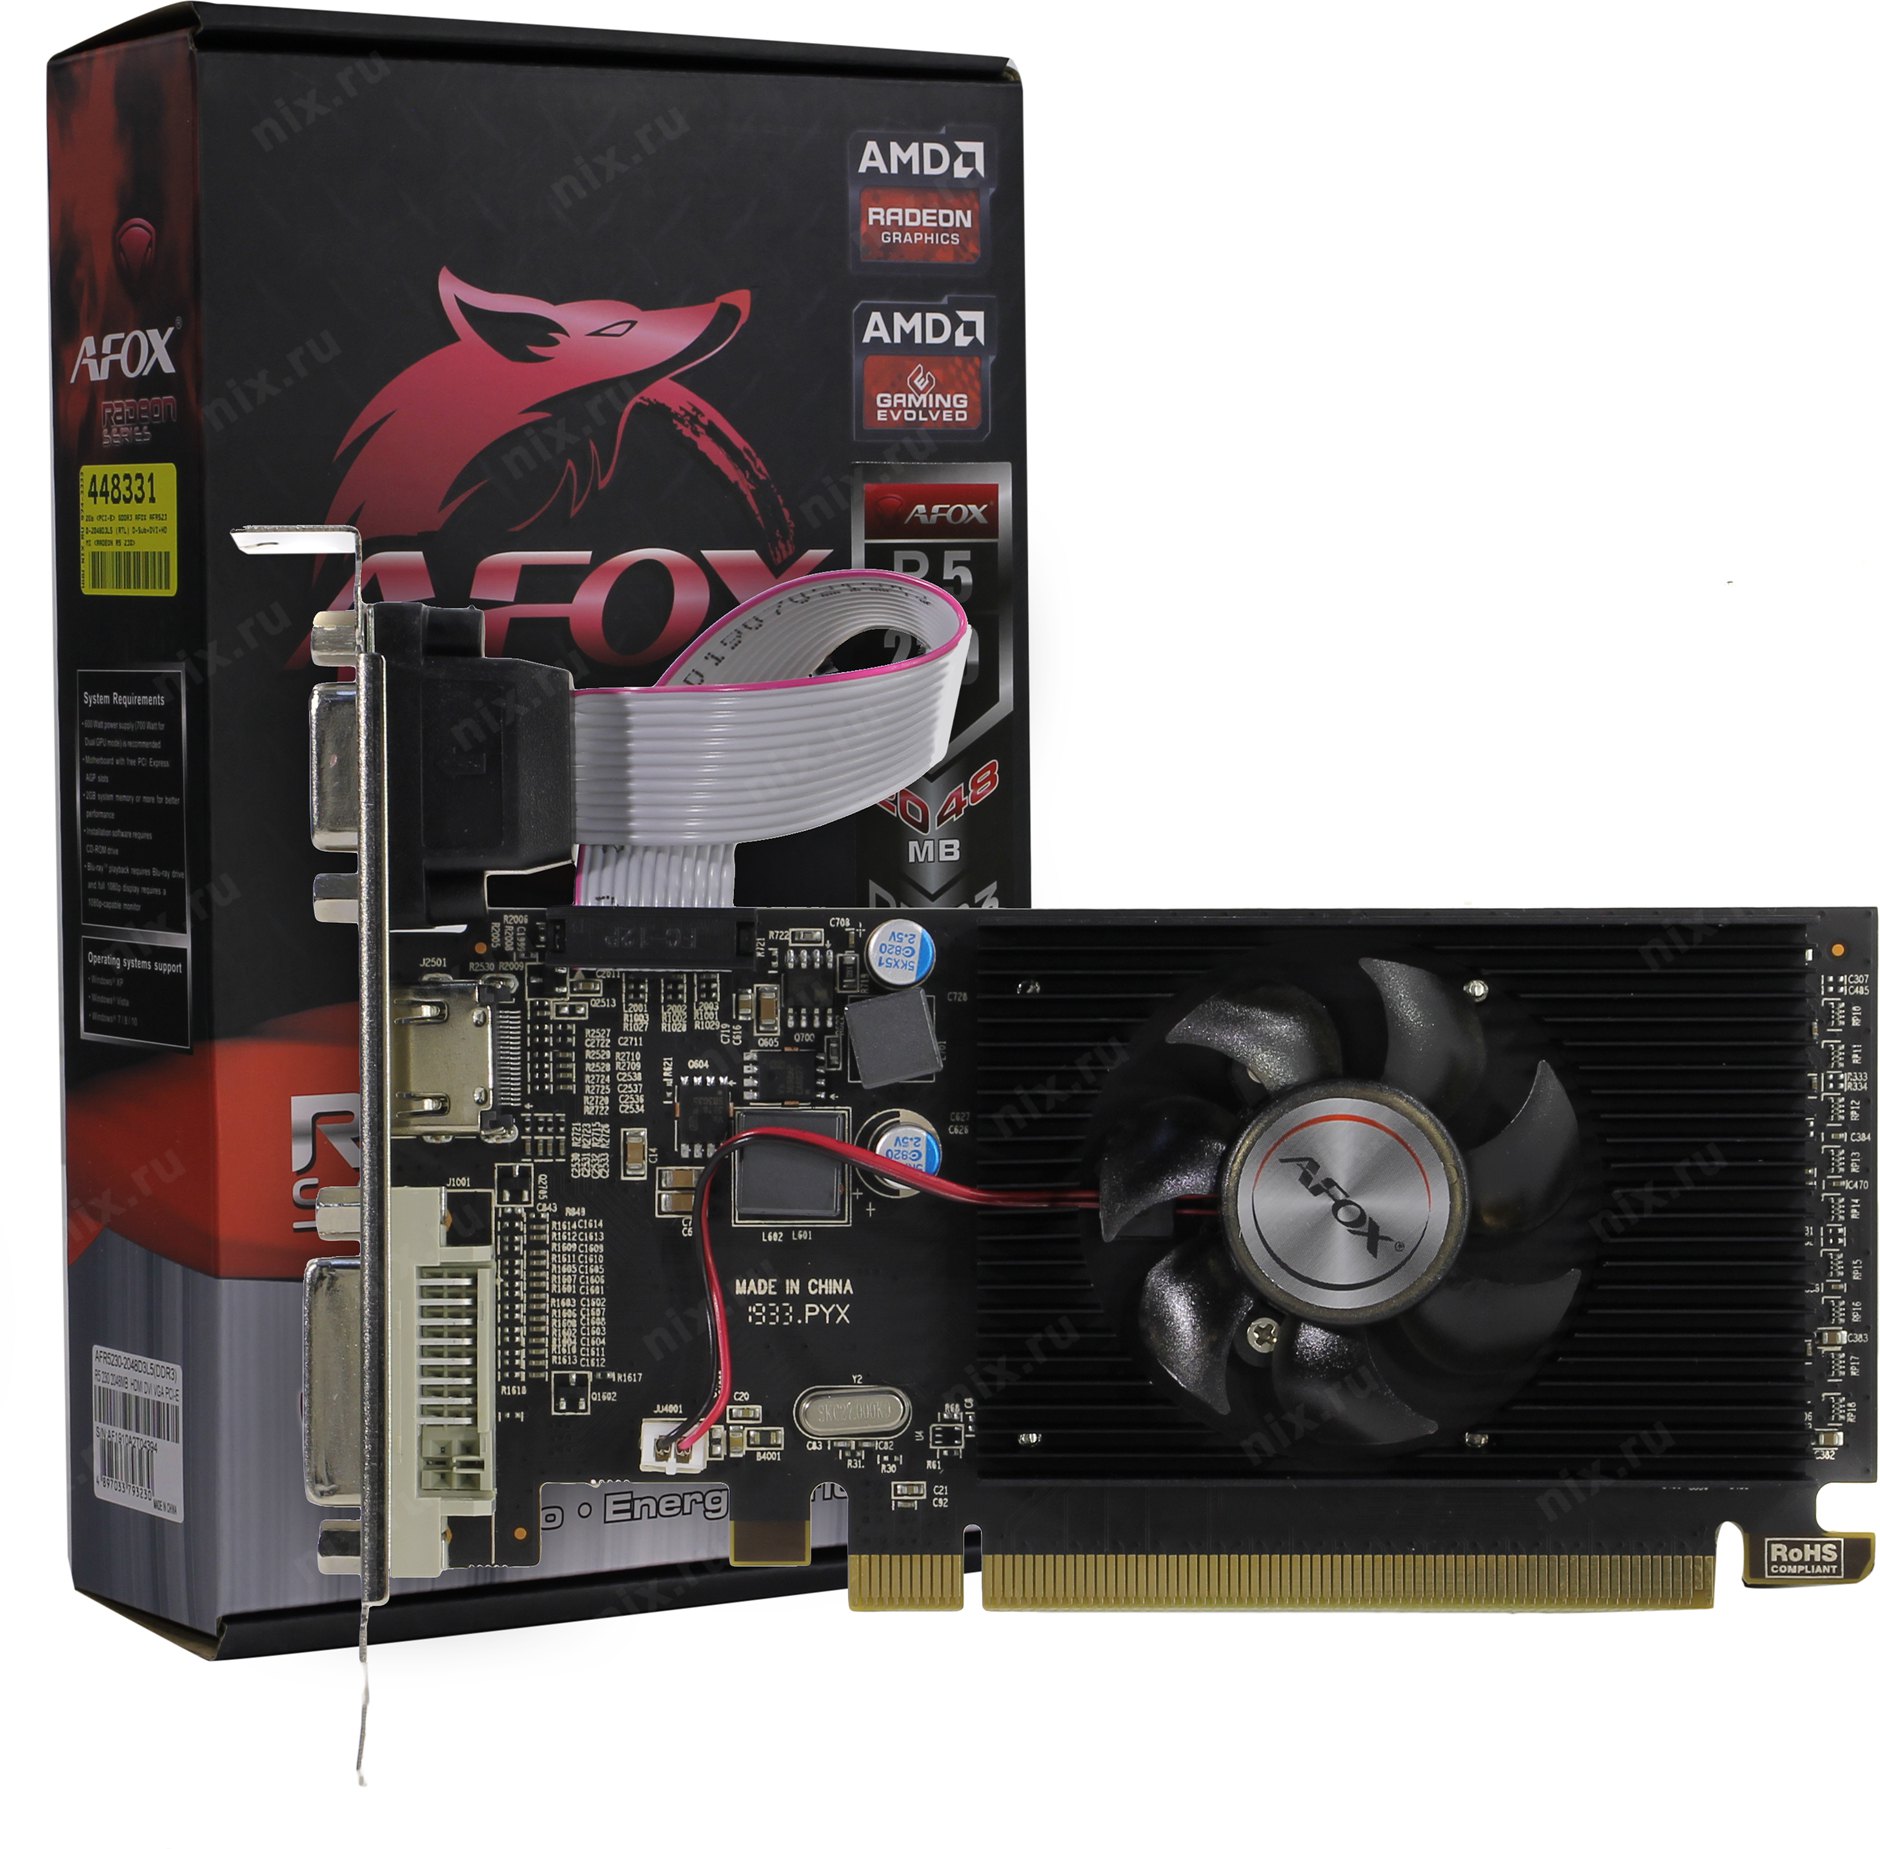 Видеокарта Afox Radeon R5 230 2Gb (AFR5230-2048D3L5) цена и фото